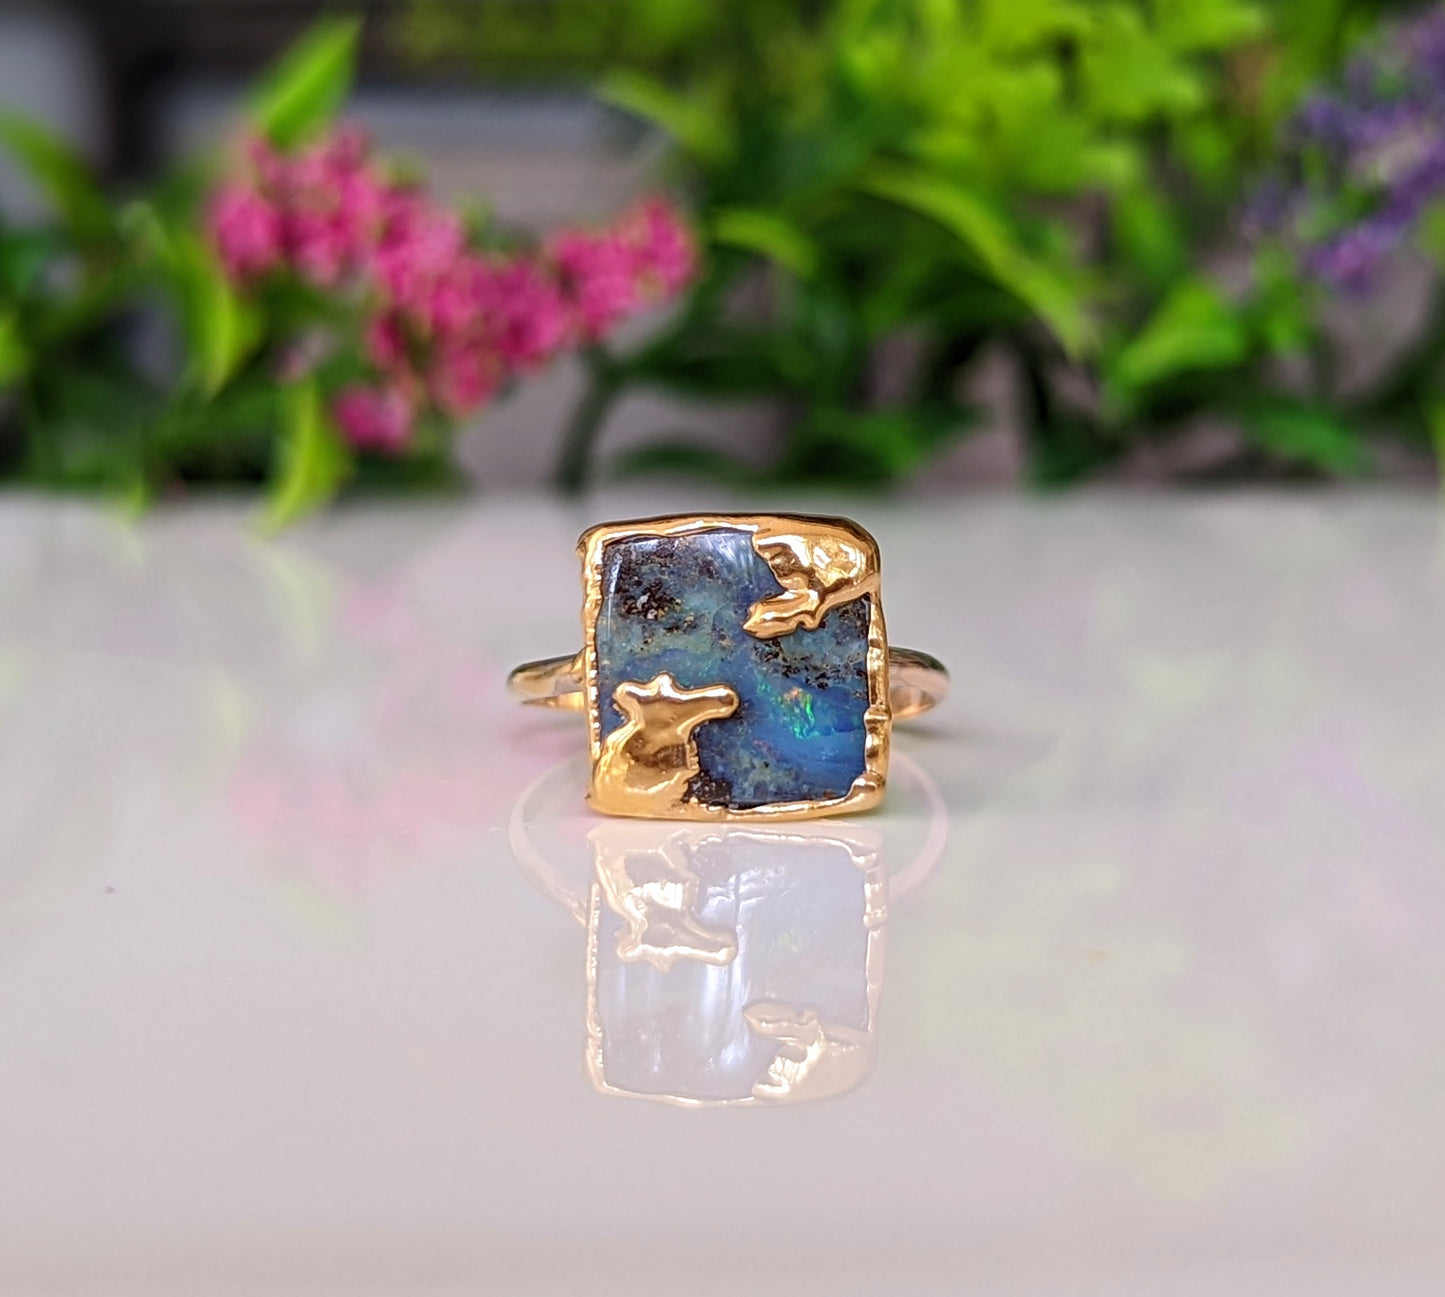 Natural Boulder Opal ring in unique Kintsugi style 18k Gold setting